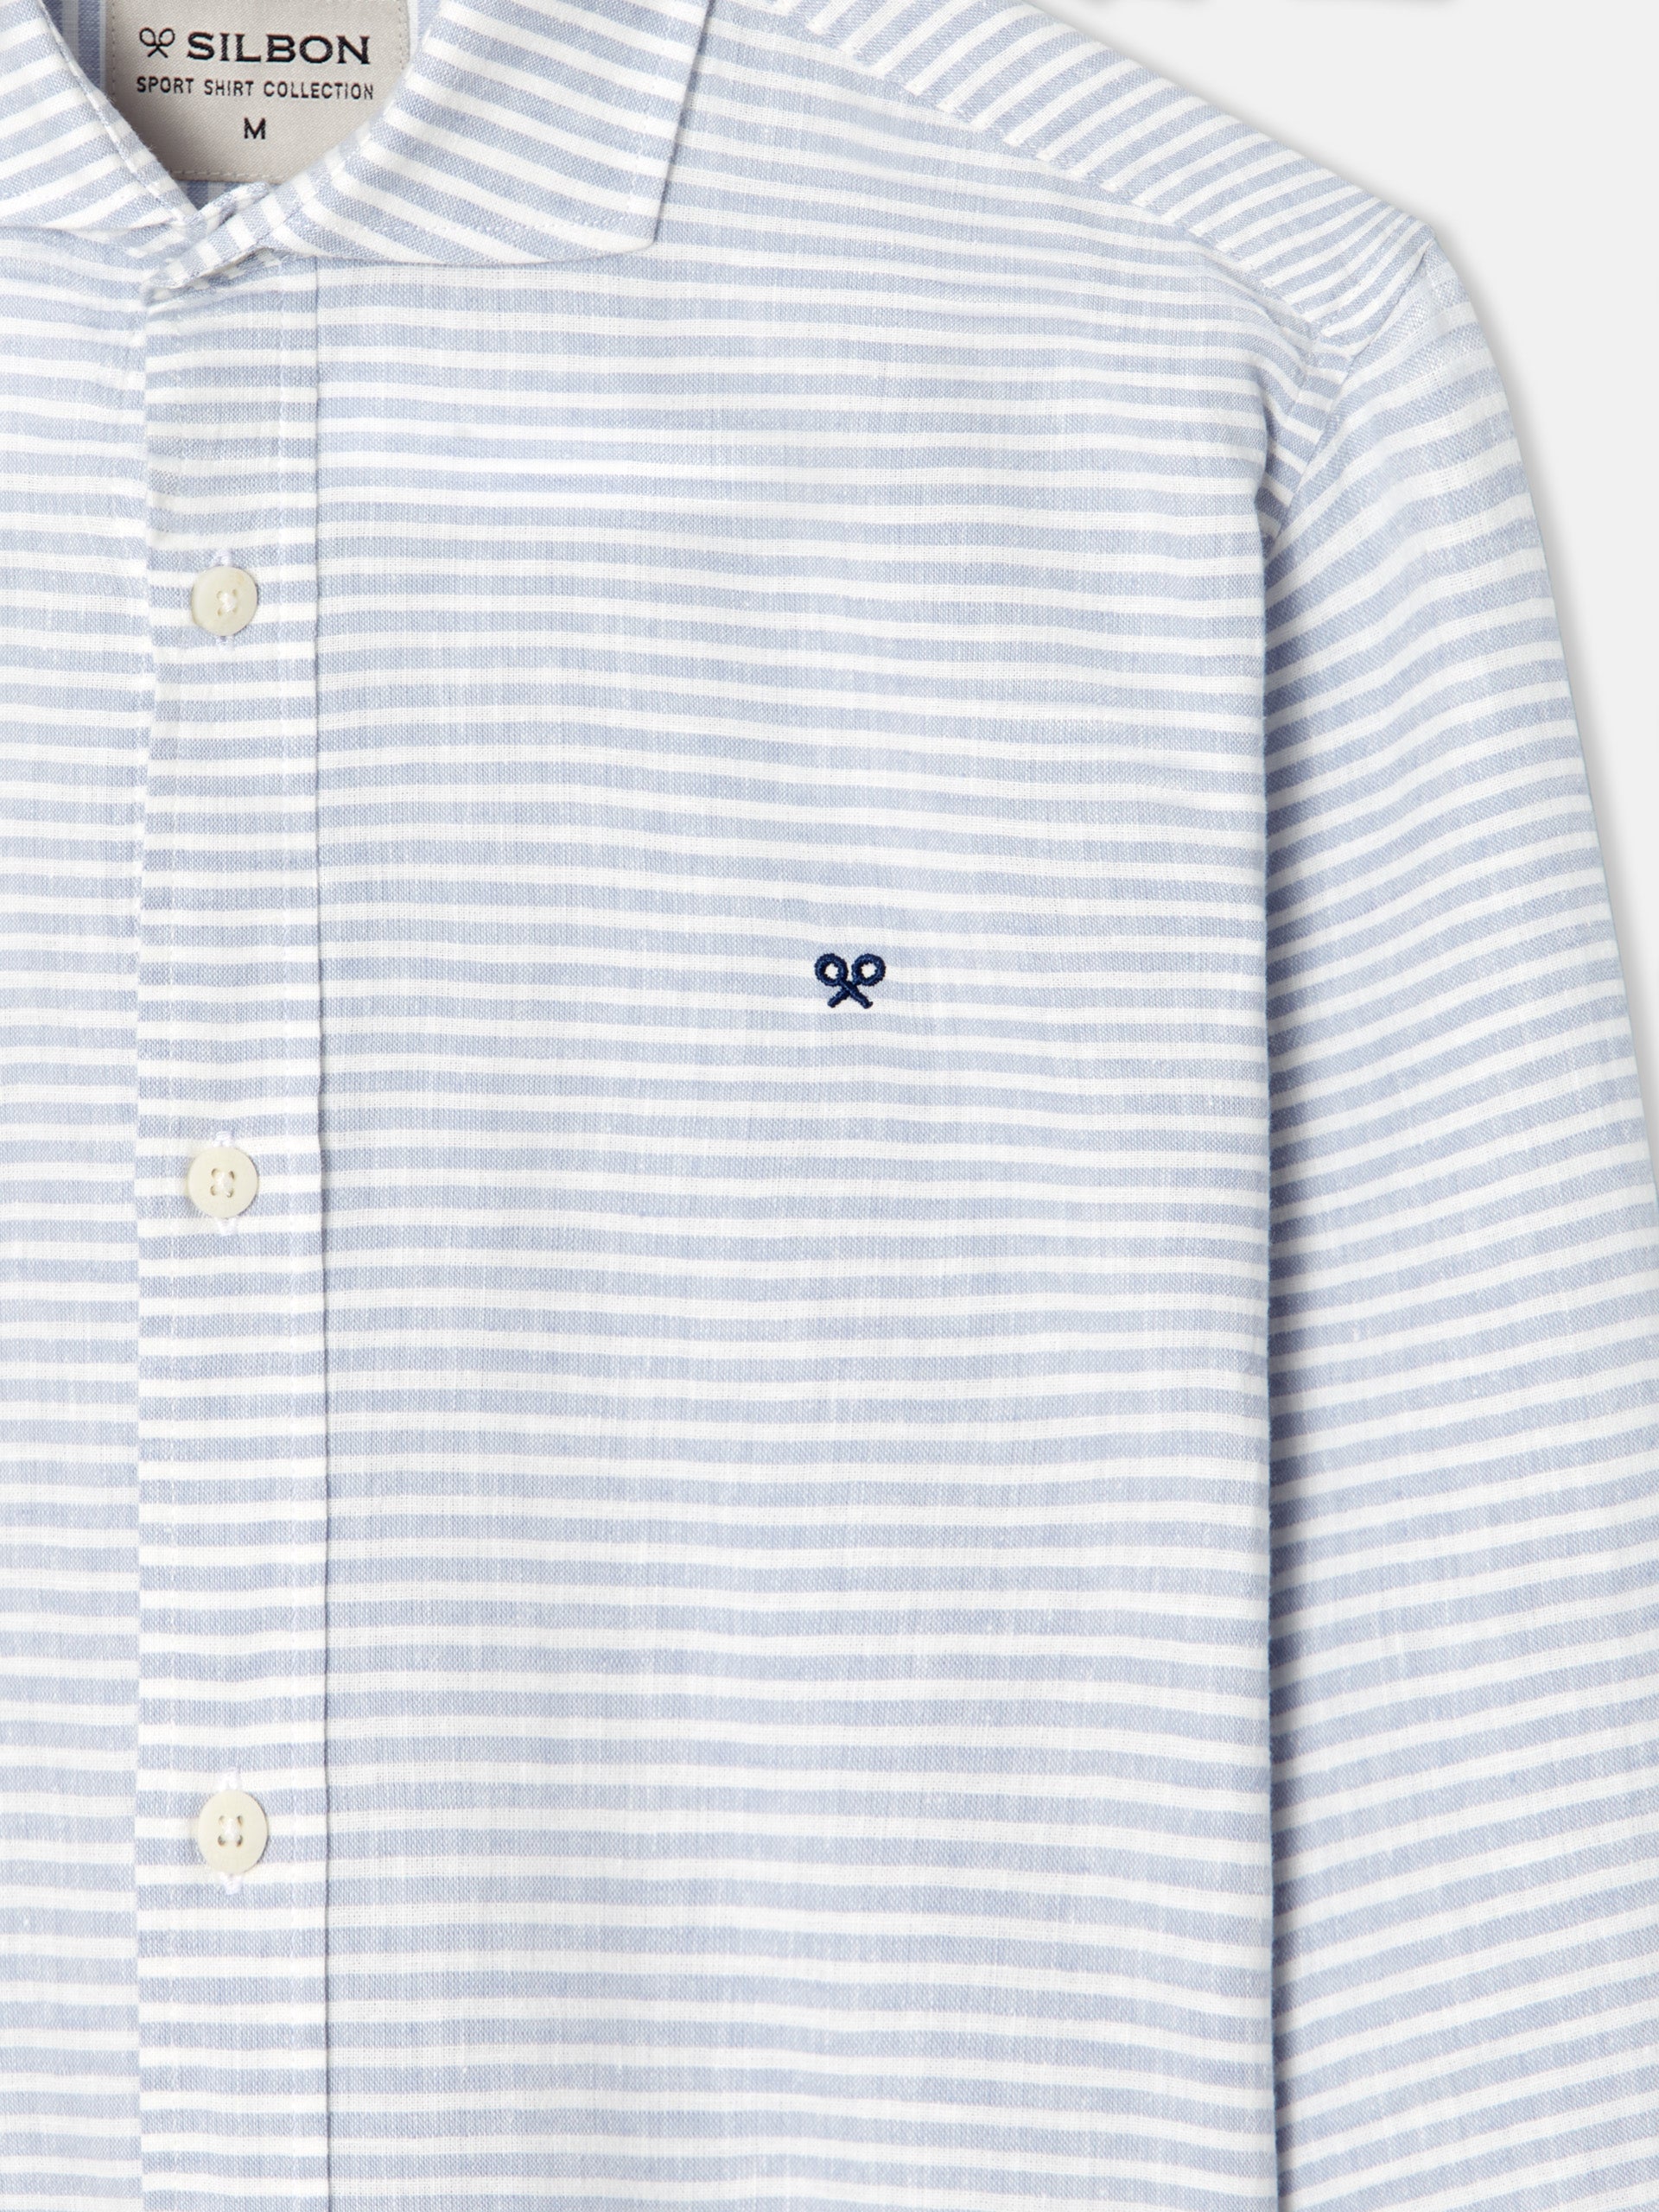 Silbon soft blue horizontal stripe sport shirt